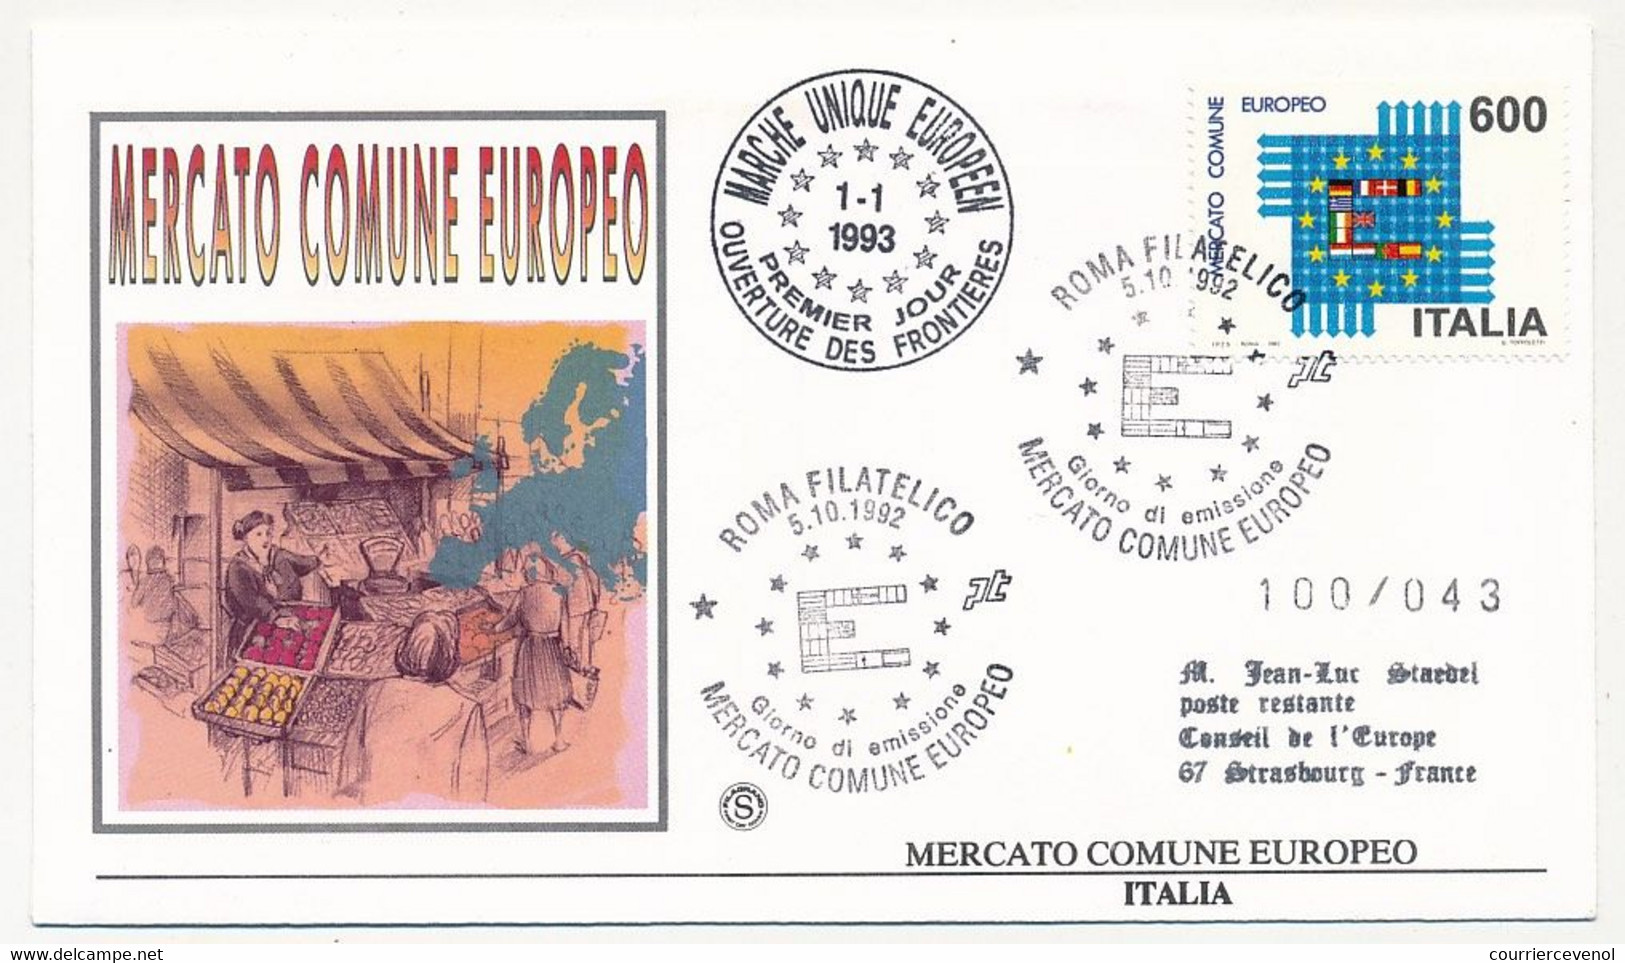 ITALIE - Enveloppe FDC - Mercato Comune Europeo (Marché Unique Européen) - Roma 5/10/1992 - Idee Europee